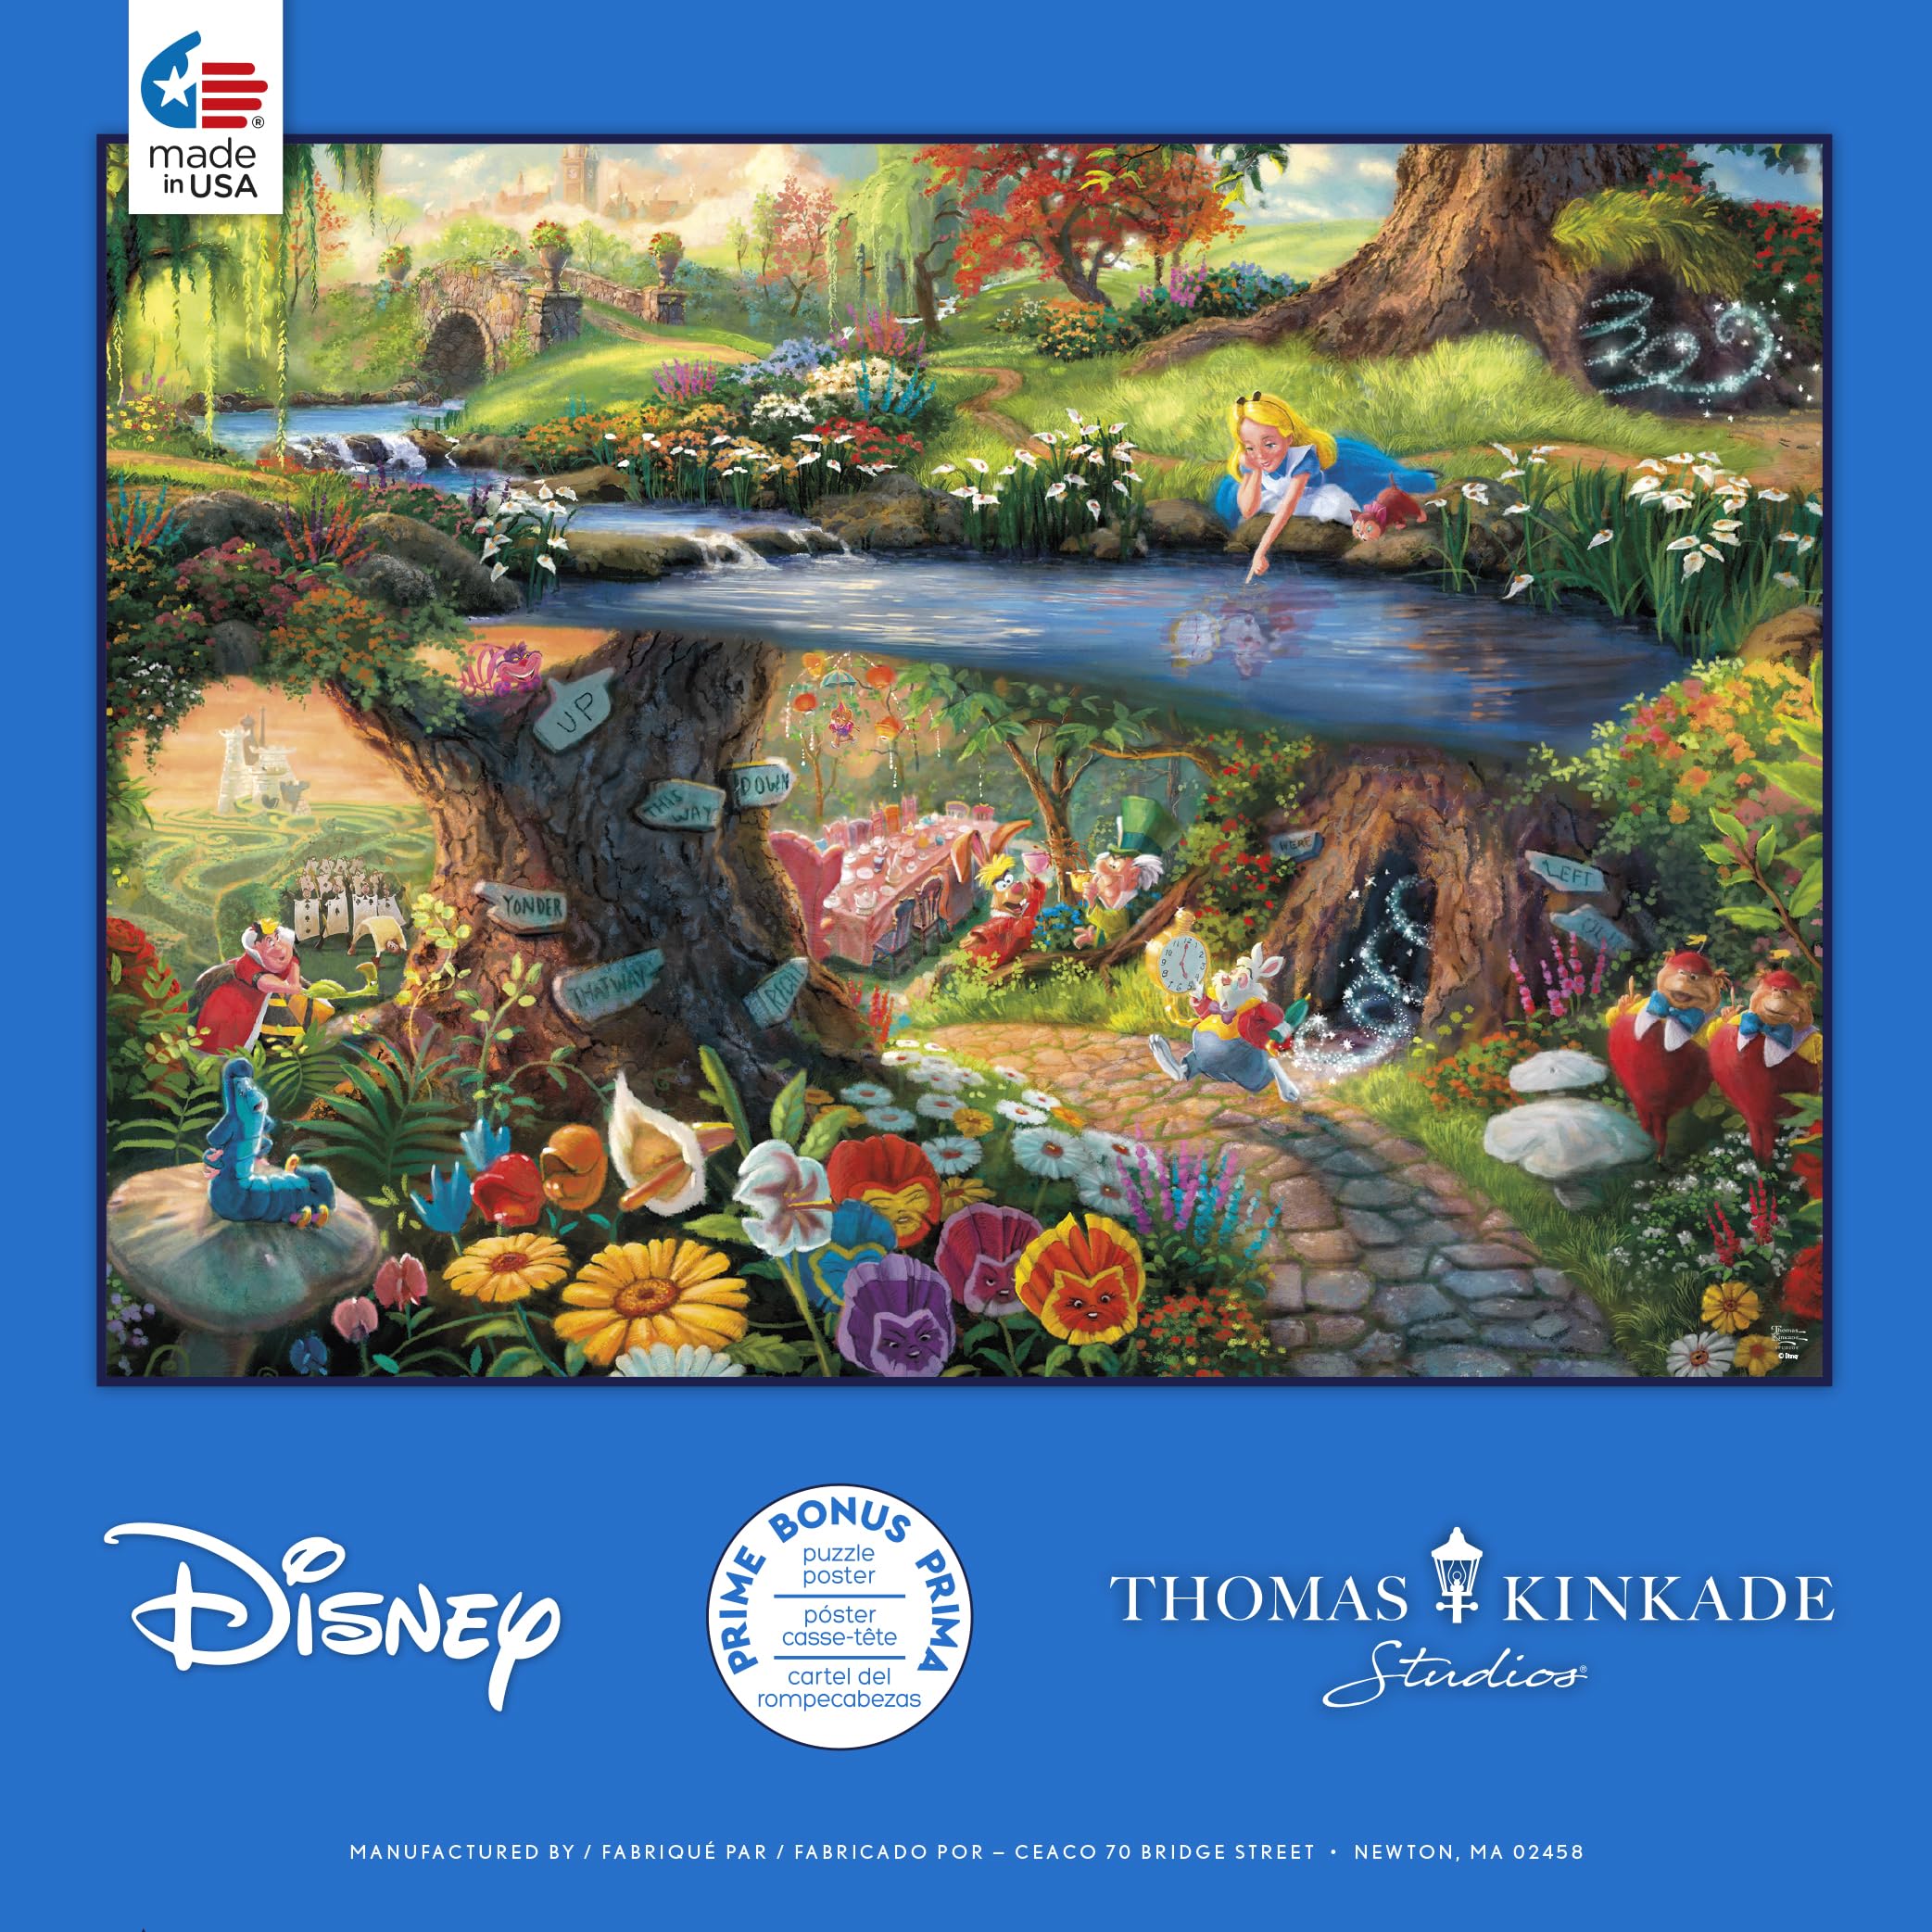 Ceaco - Disney - Thomas Kinkade - Alice in Wonderland - 1000 Piece Jigsaw Puzzle